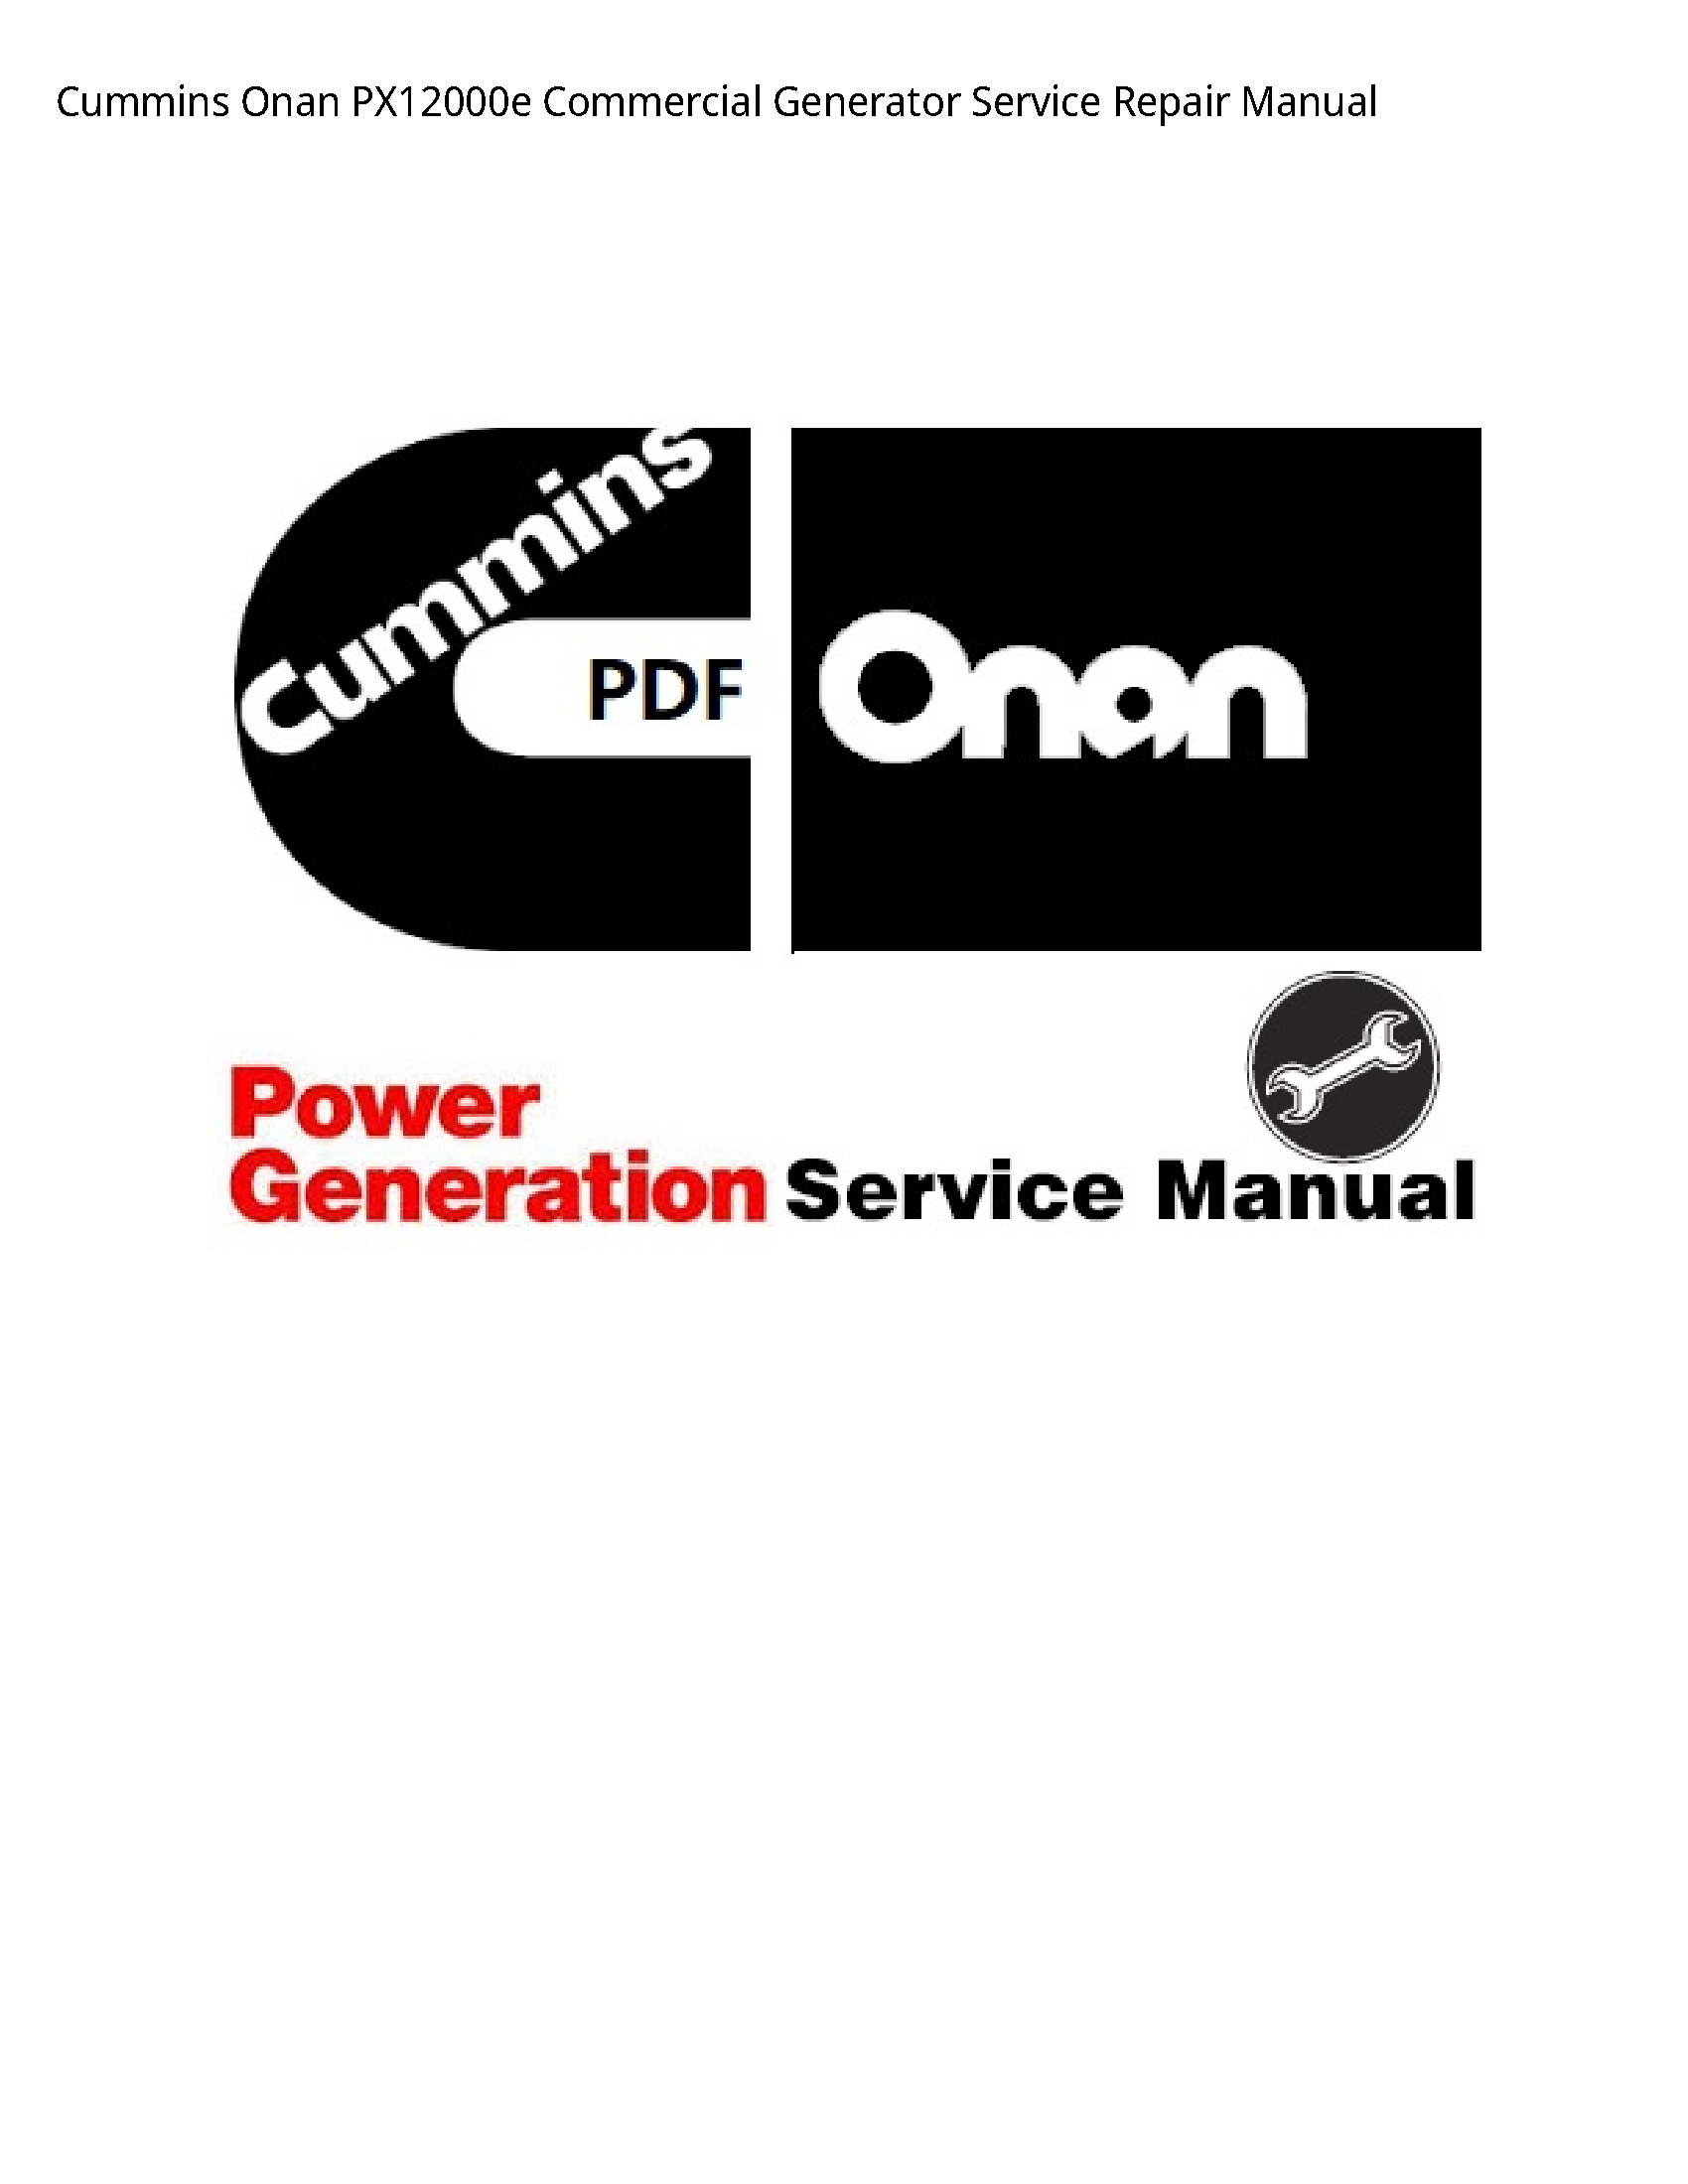 Cummins PX12000e Onan Commercial Generator manual